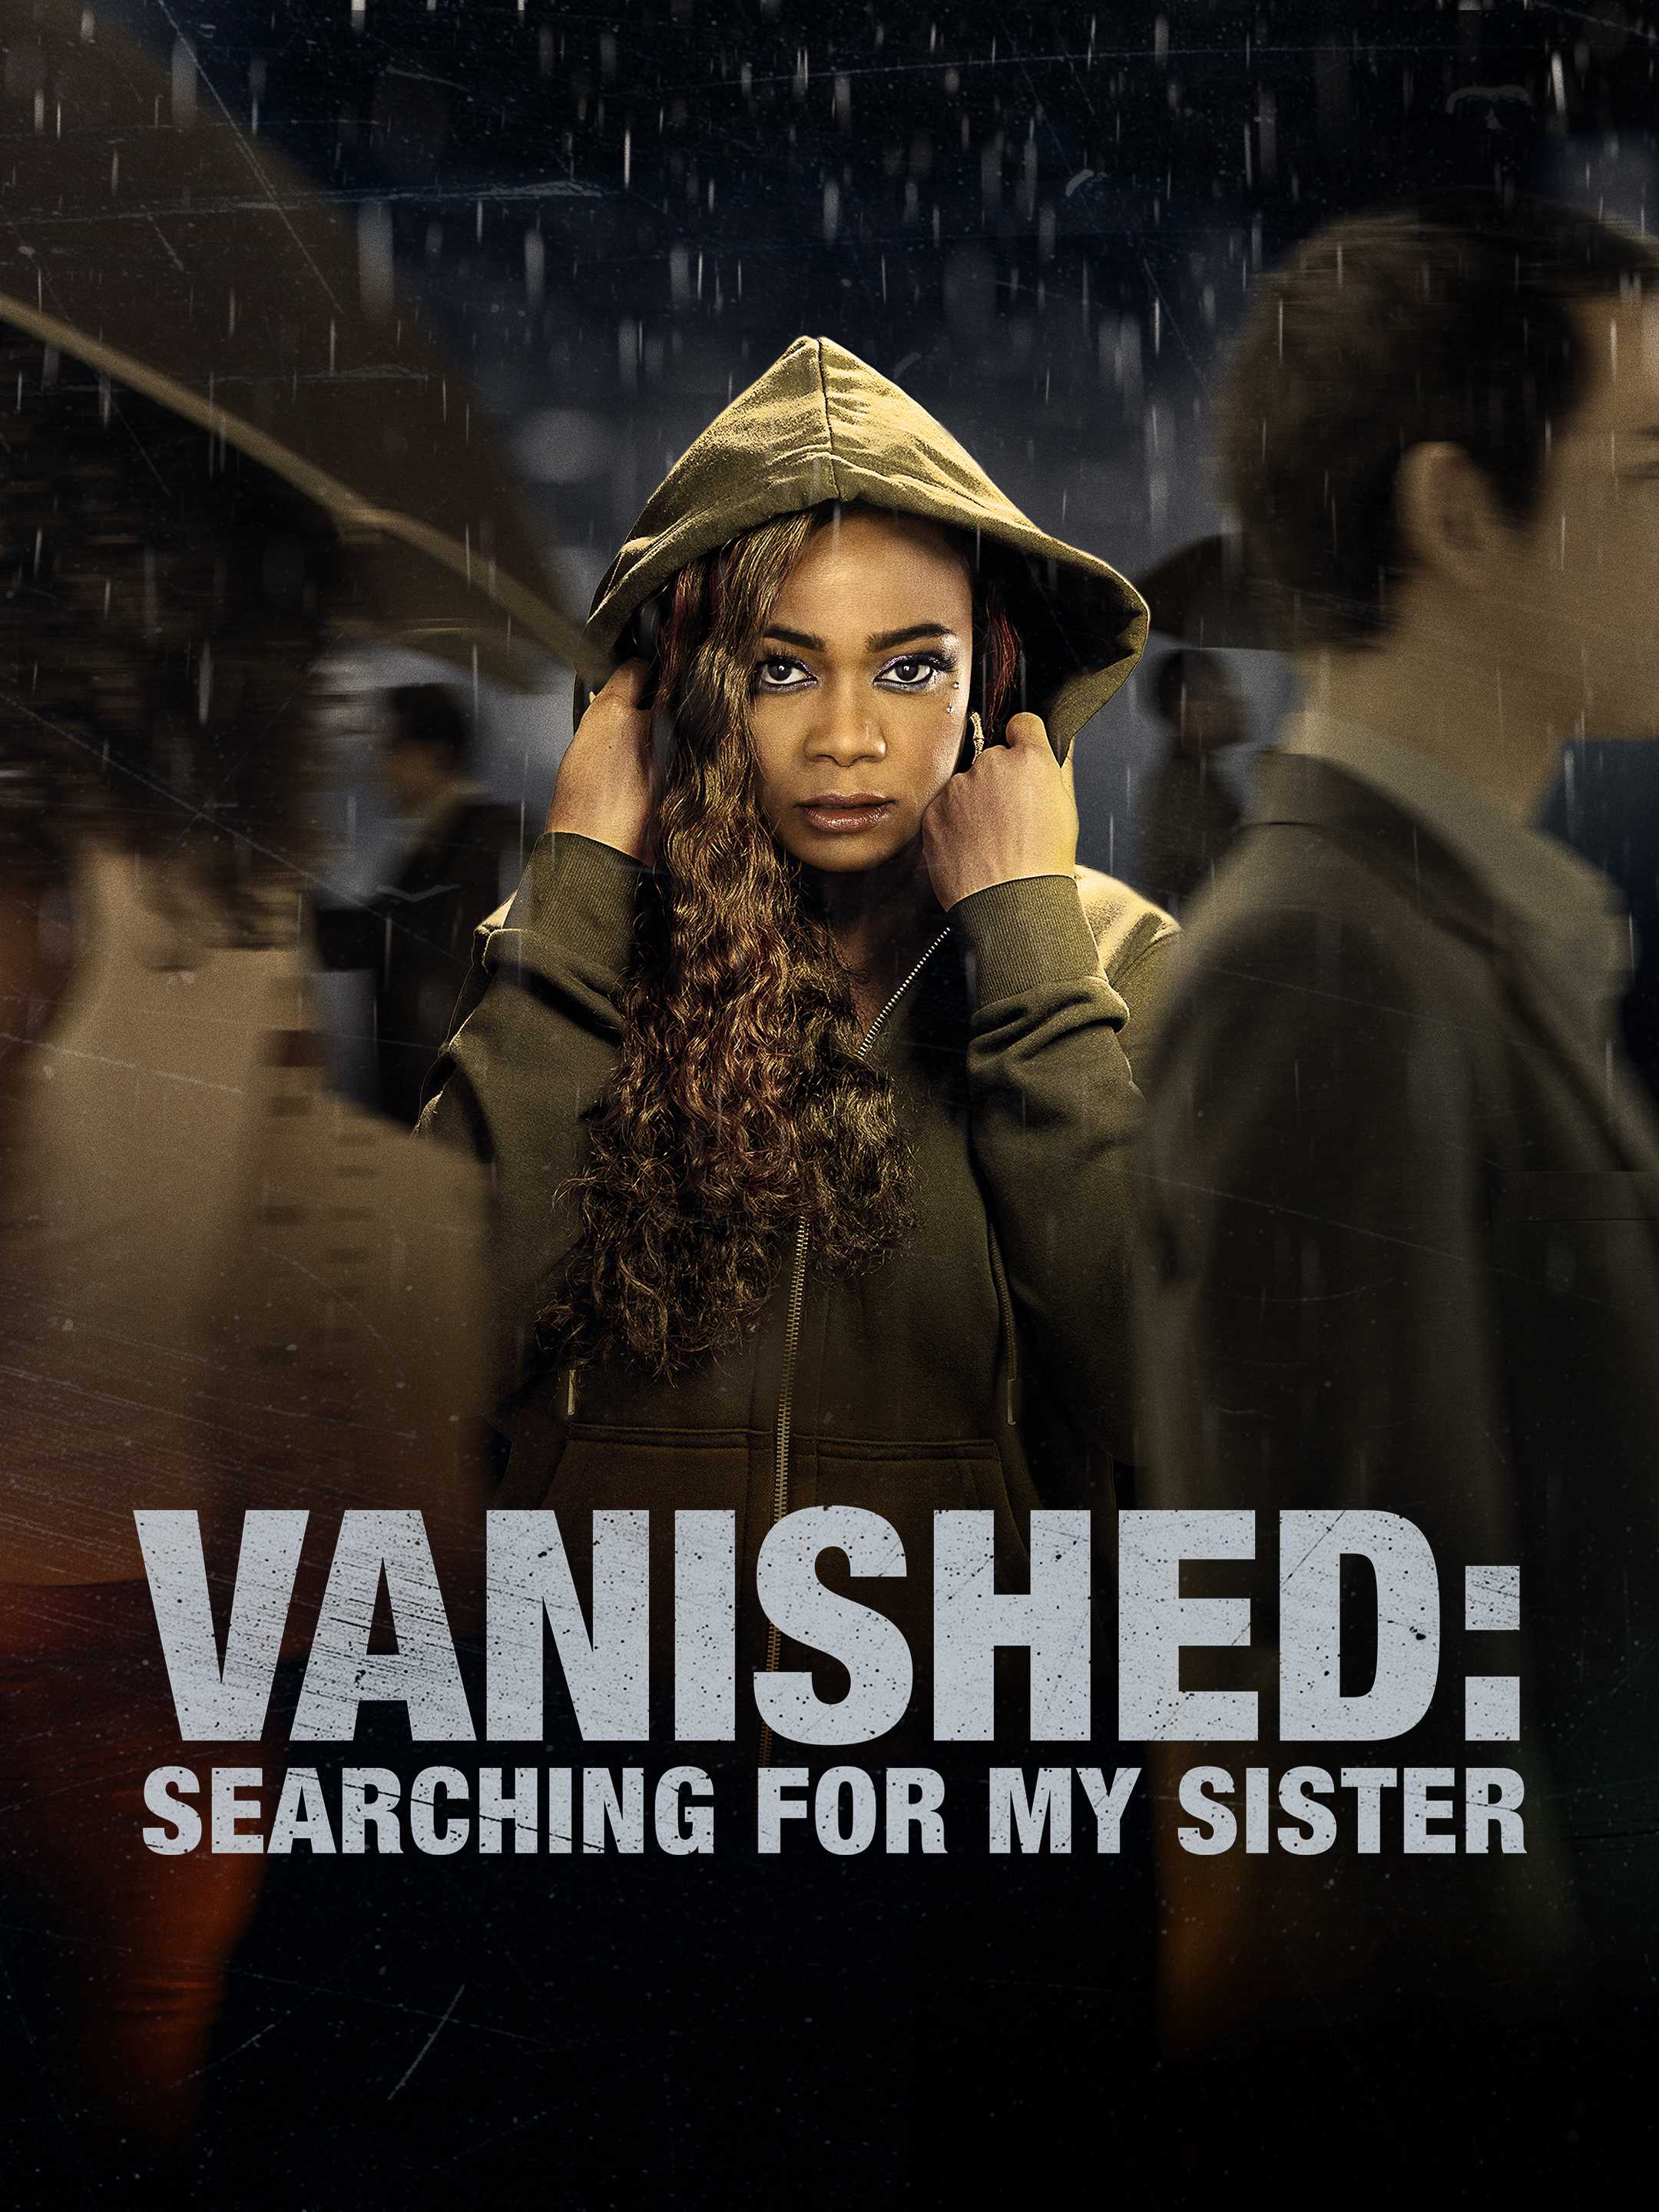 Nonton film Vanished: Searching for My Sister layarkaca21 indoxx1 ganool online streaming terbaru